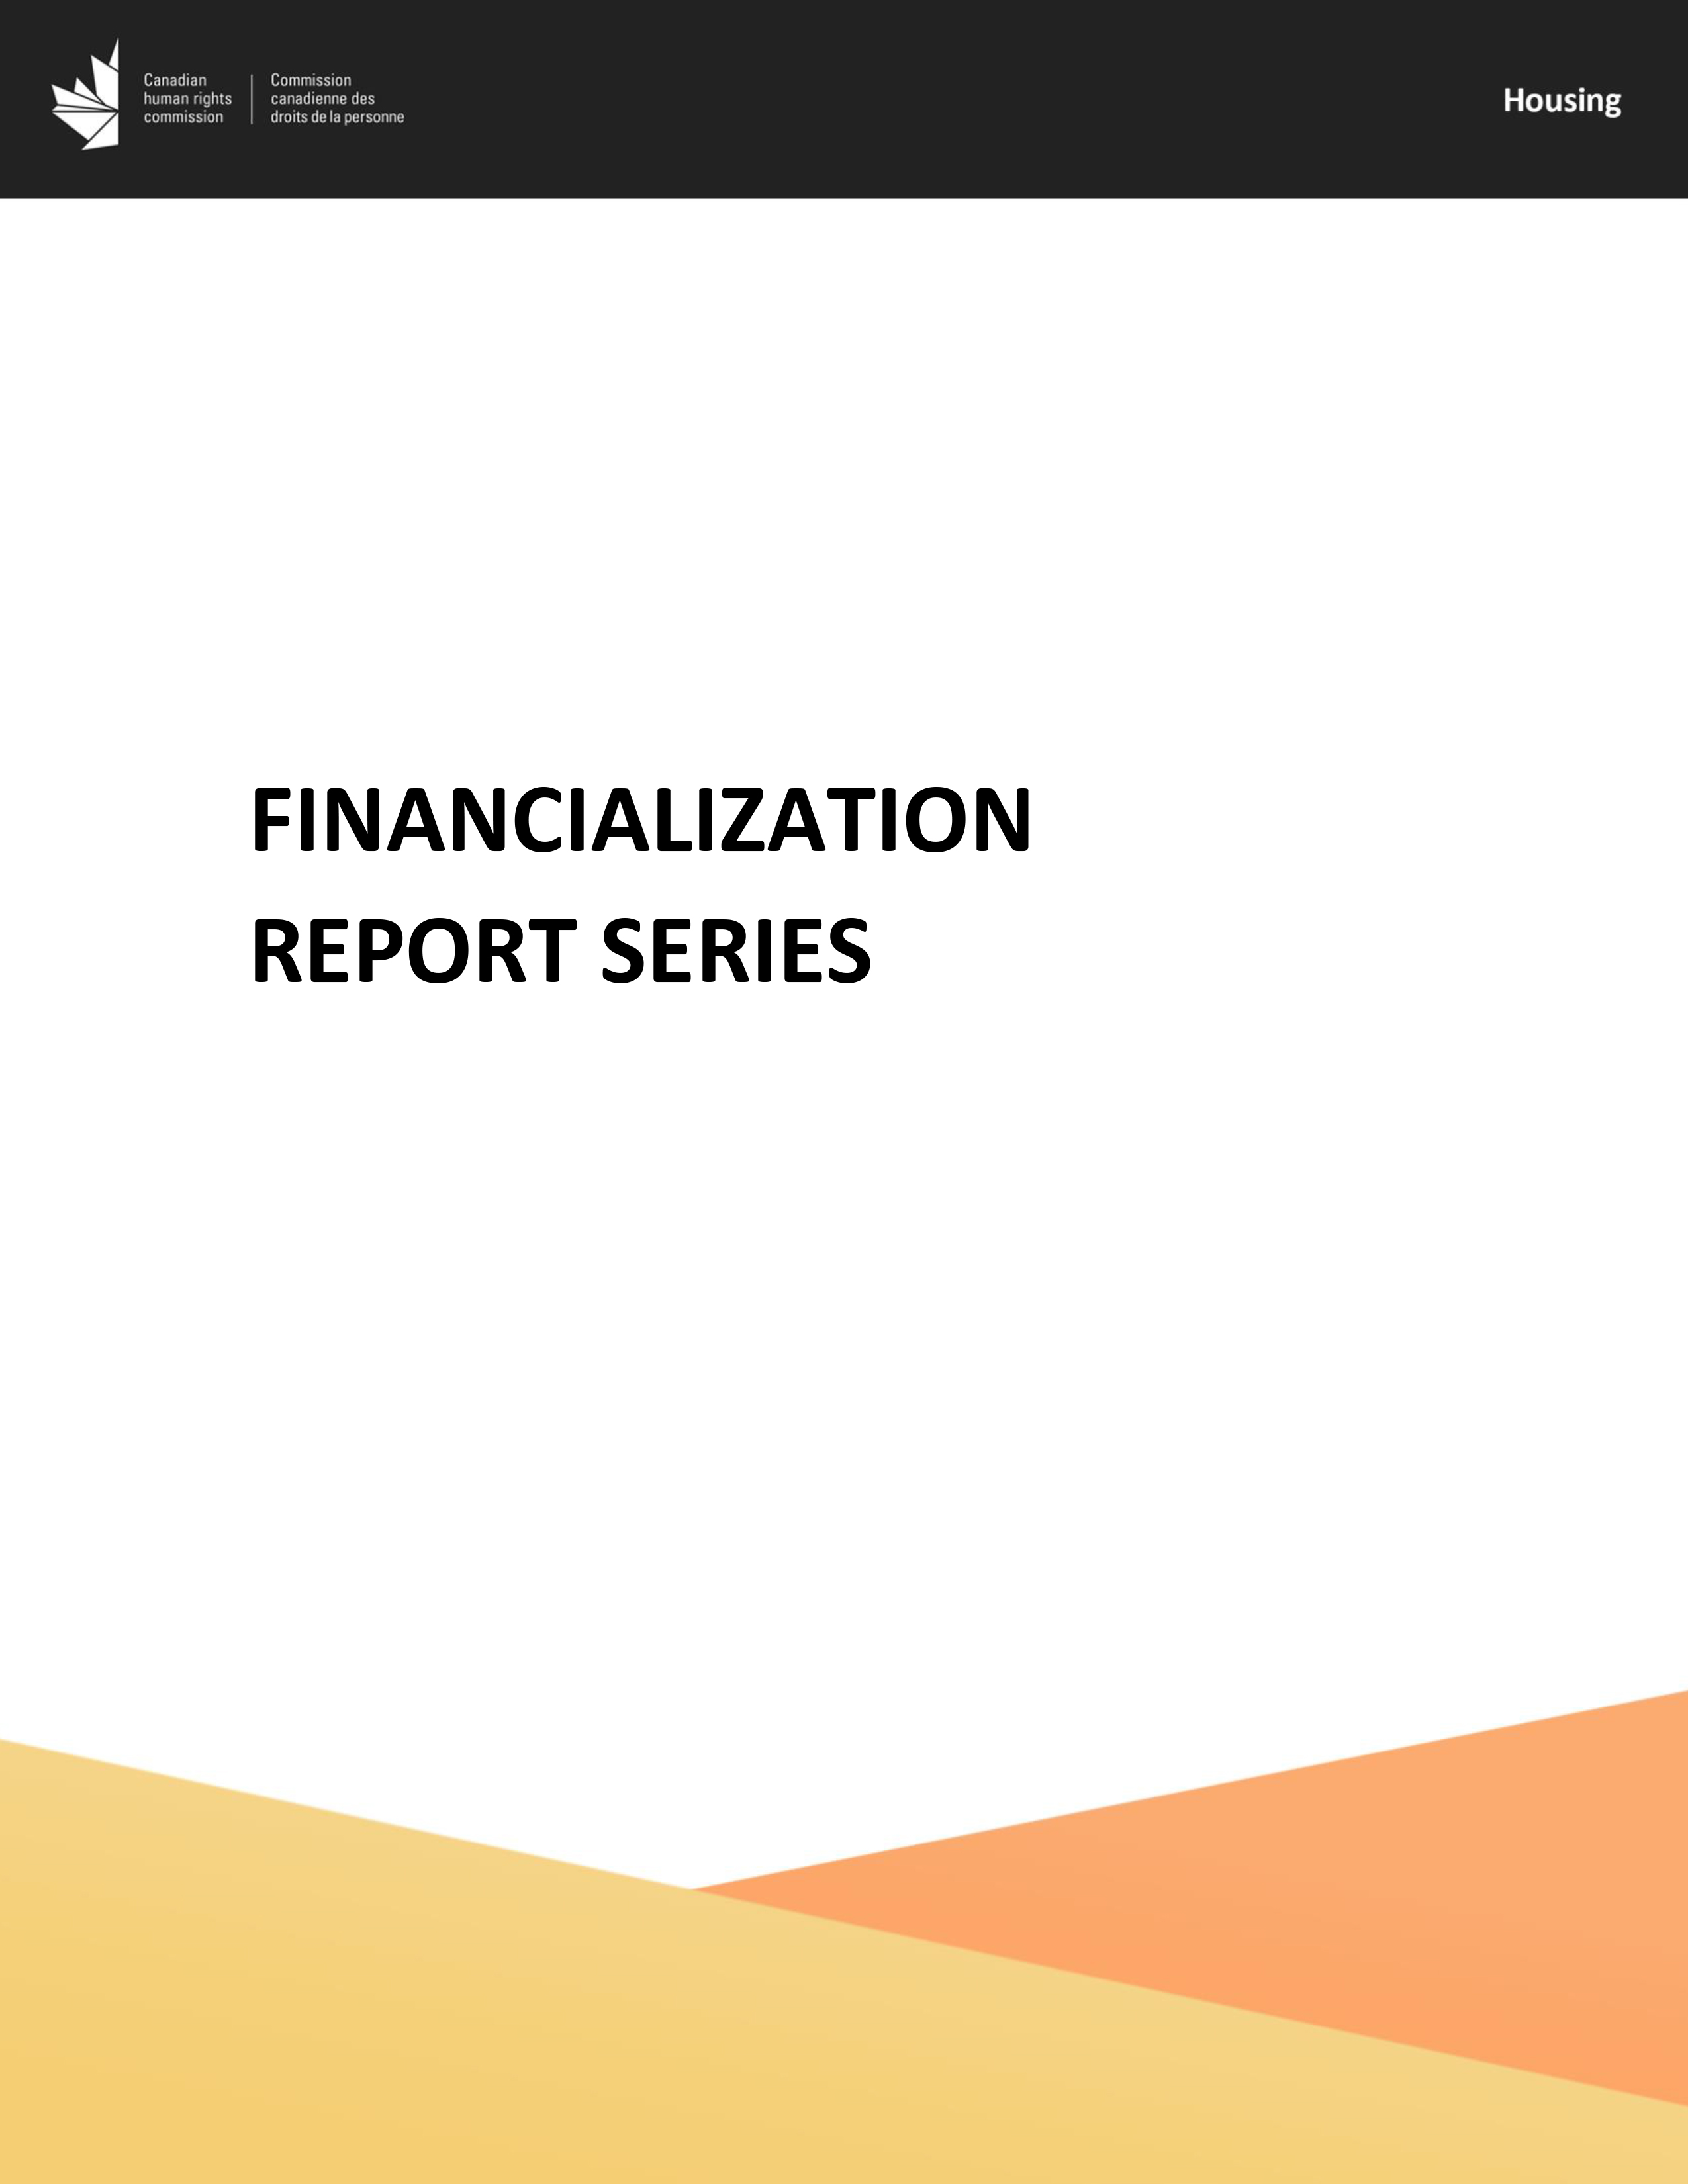 Financialization report series